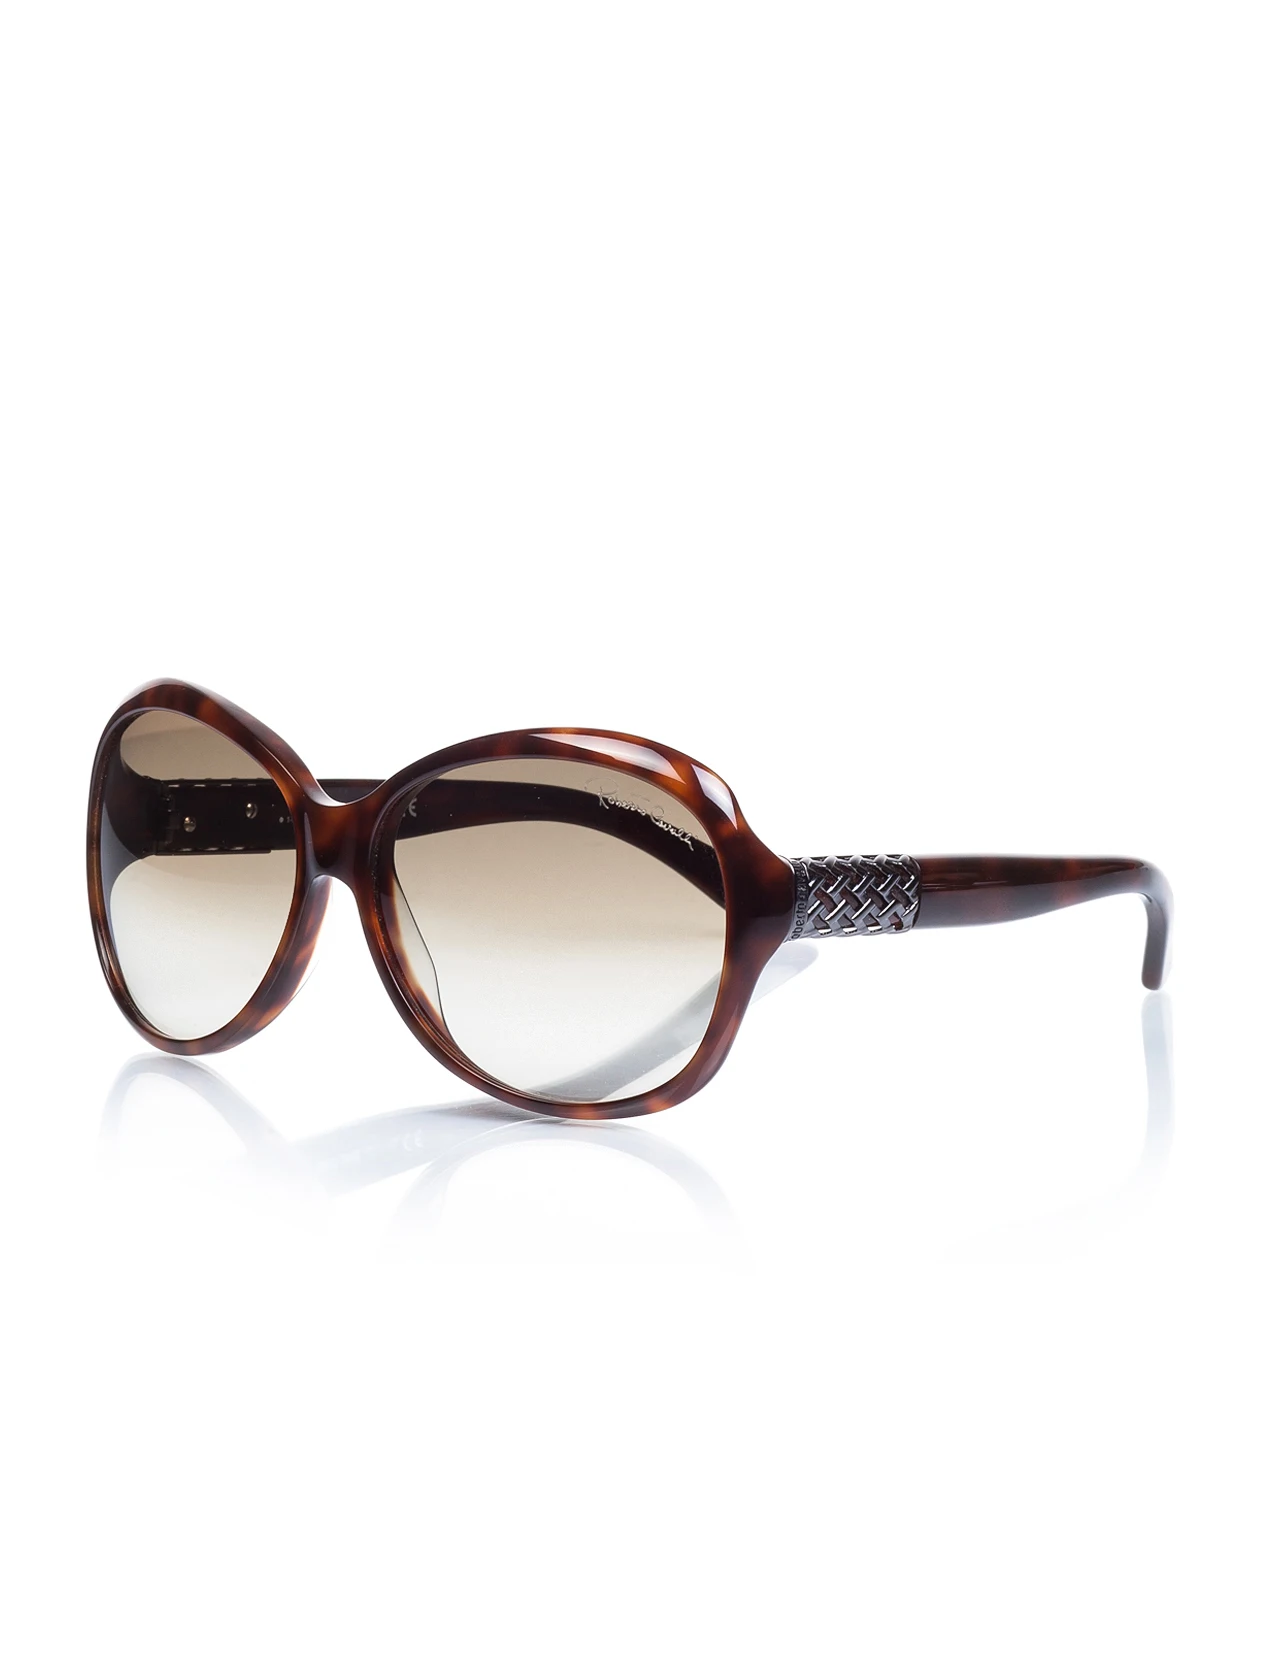 

Women's sunglasses rc 594 52p bone Brown organic oval aval 62-14-135 roberto cavalli